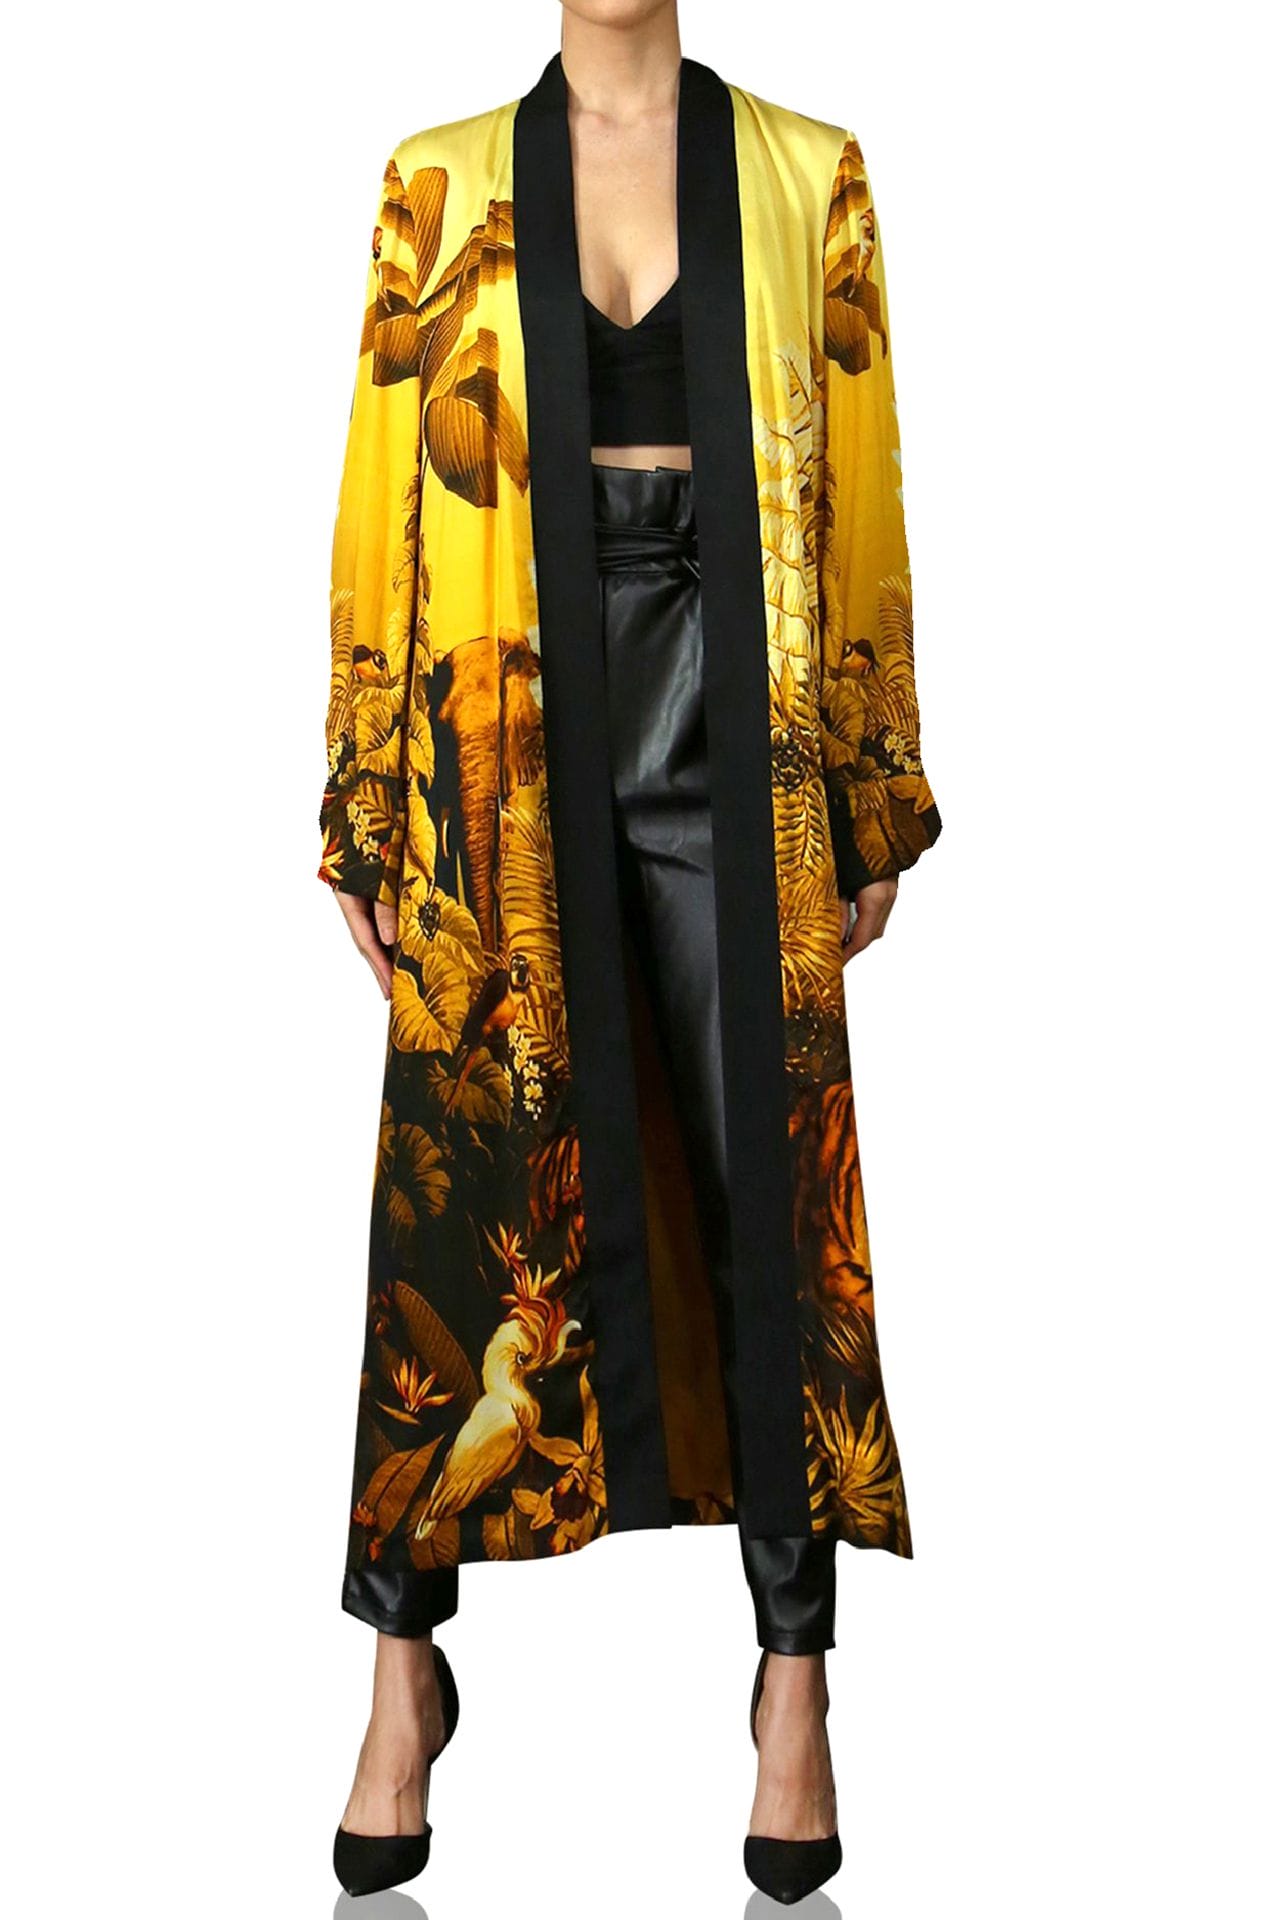 "Kyle X Shahida" "kimono silk robes for women" "100 silk robe" "ladies silk kimono robe" "yellow silk robe"